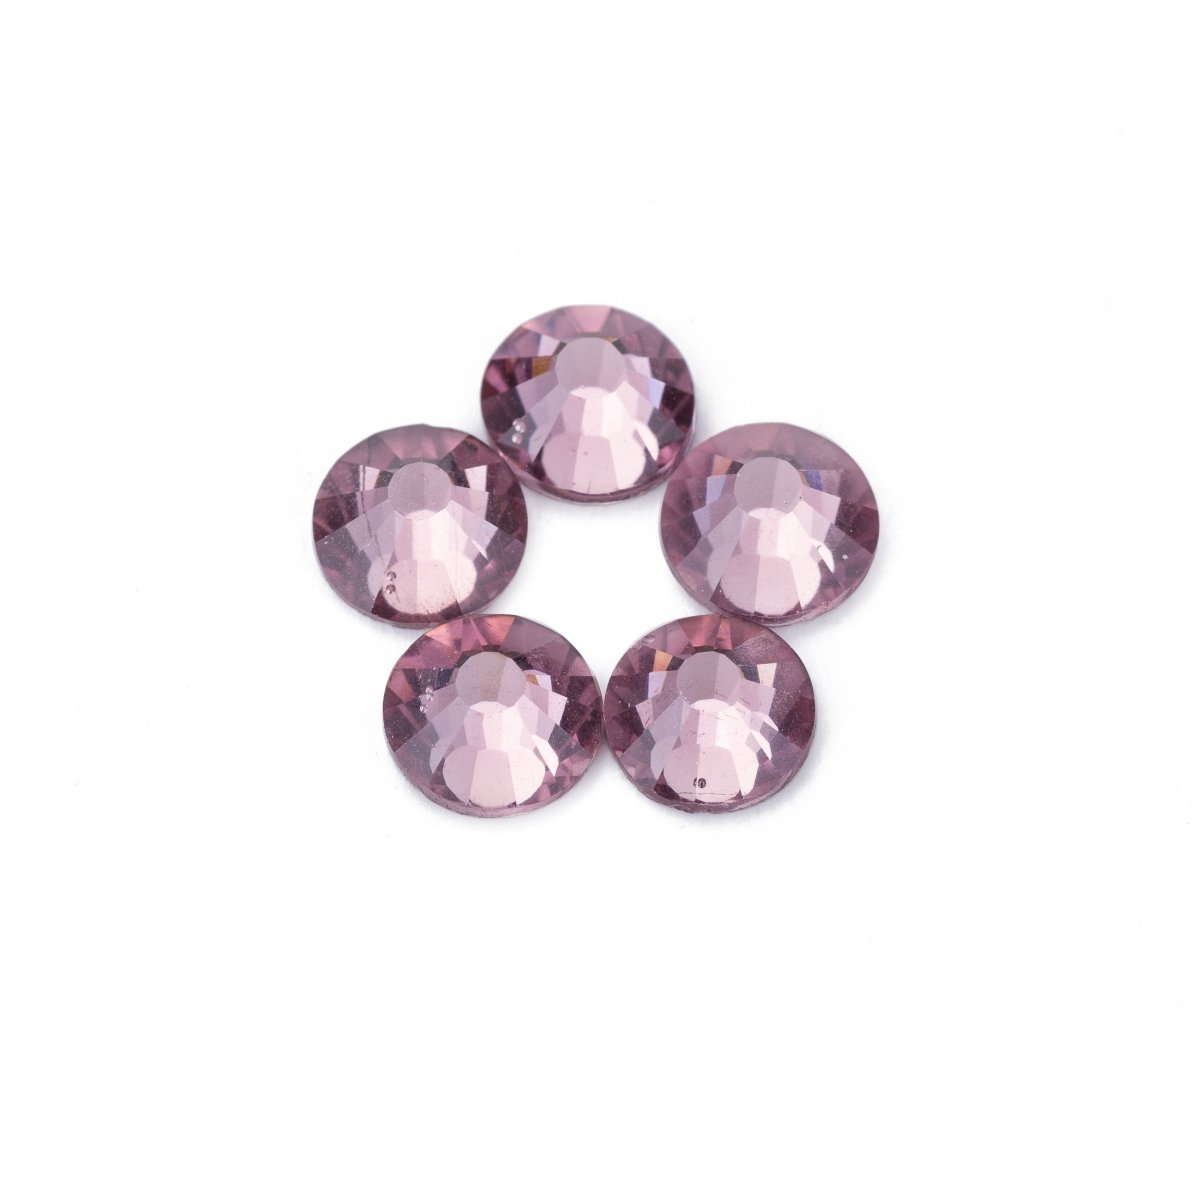 288 pcs High Quality Crystal Light Amethyst Purple Rhinestones wholesale loose Crystal flat back No Hot Fix glass bead Size ss 30 / ss 34, SS30-LAMETHYST - DLUXCA